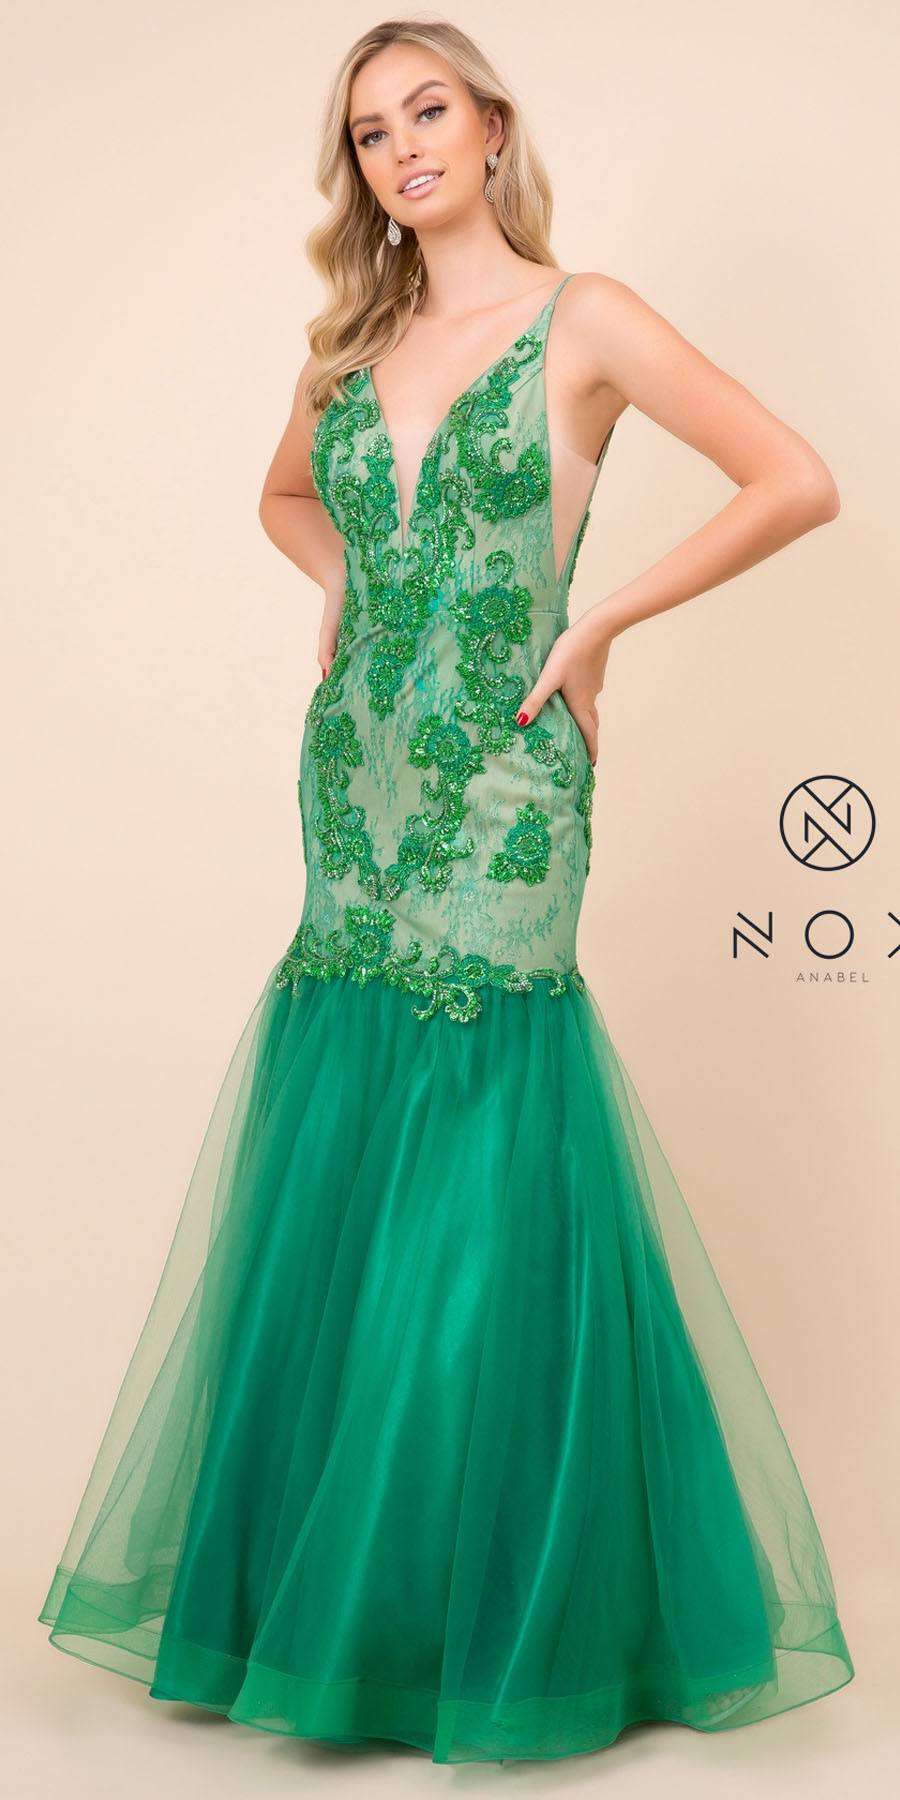 Nox Anabel E185 Green Mermaid Style Embellished Bodice Long Prom Dress 